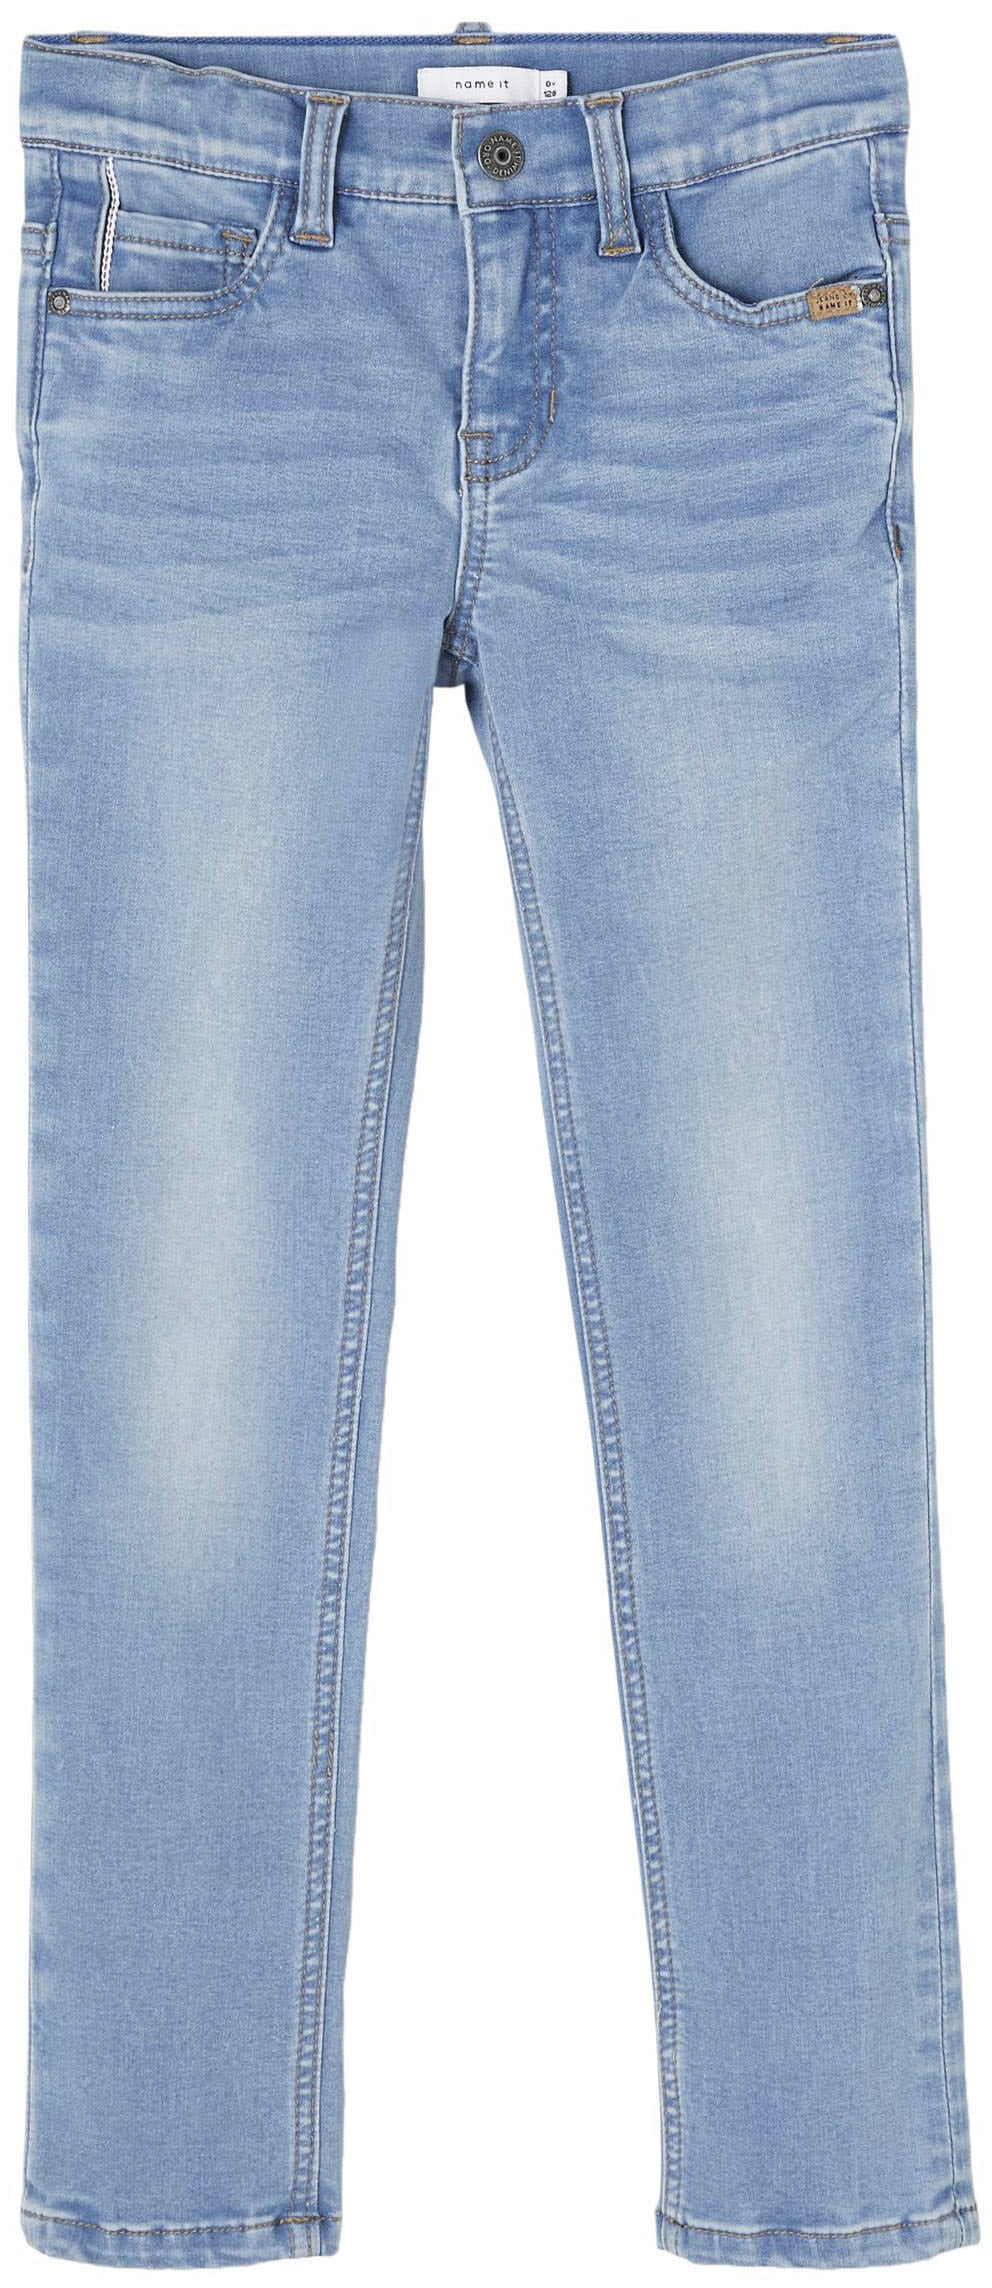 OTTO Stretch-Jeans bei It Name kaufen